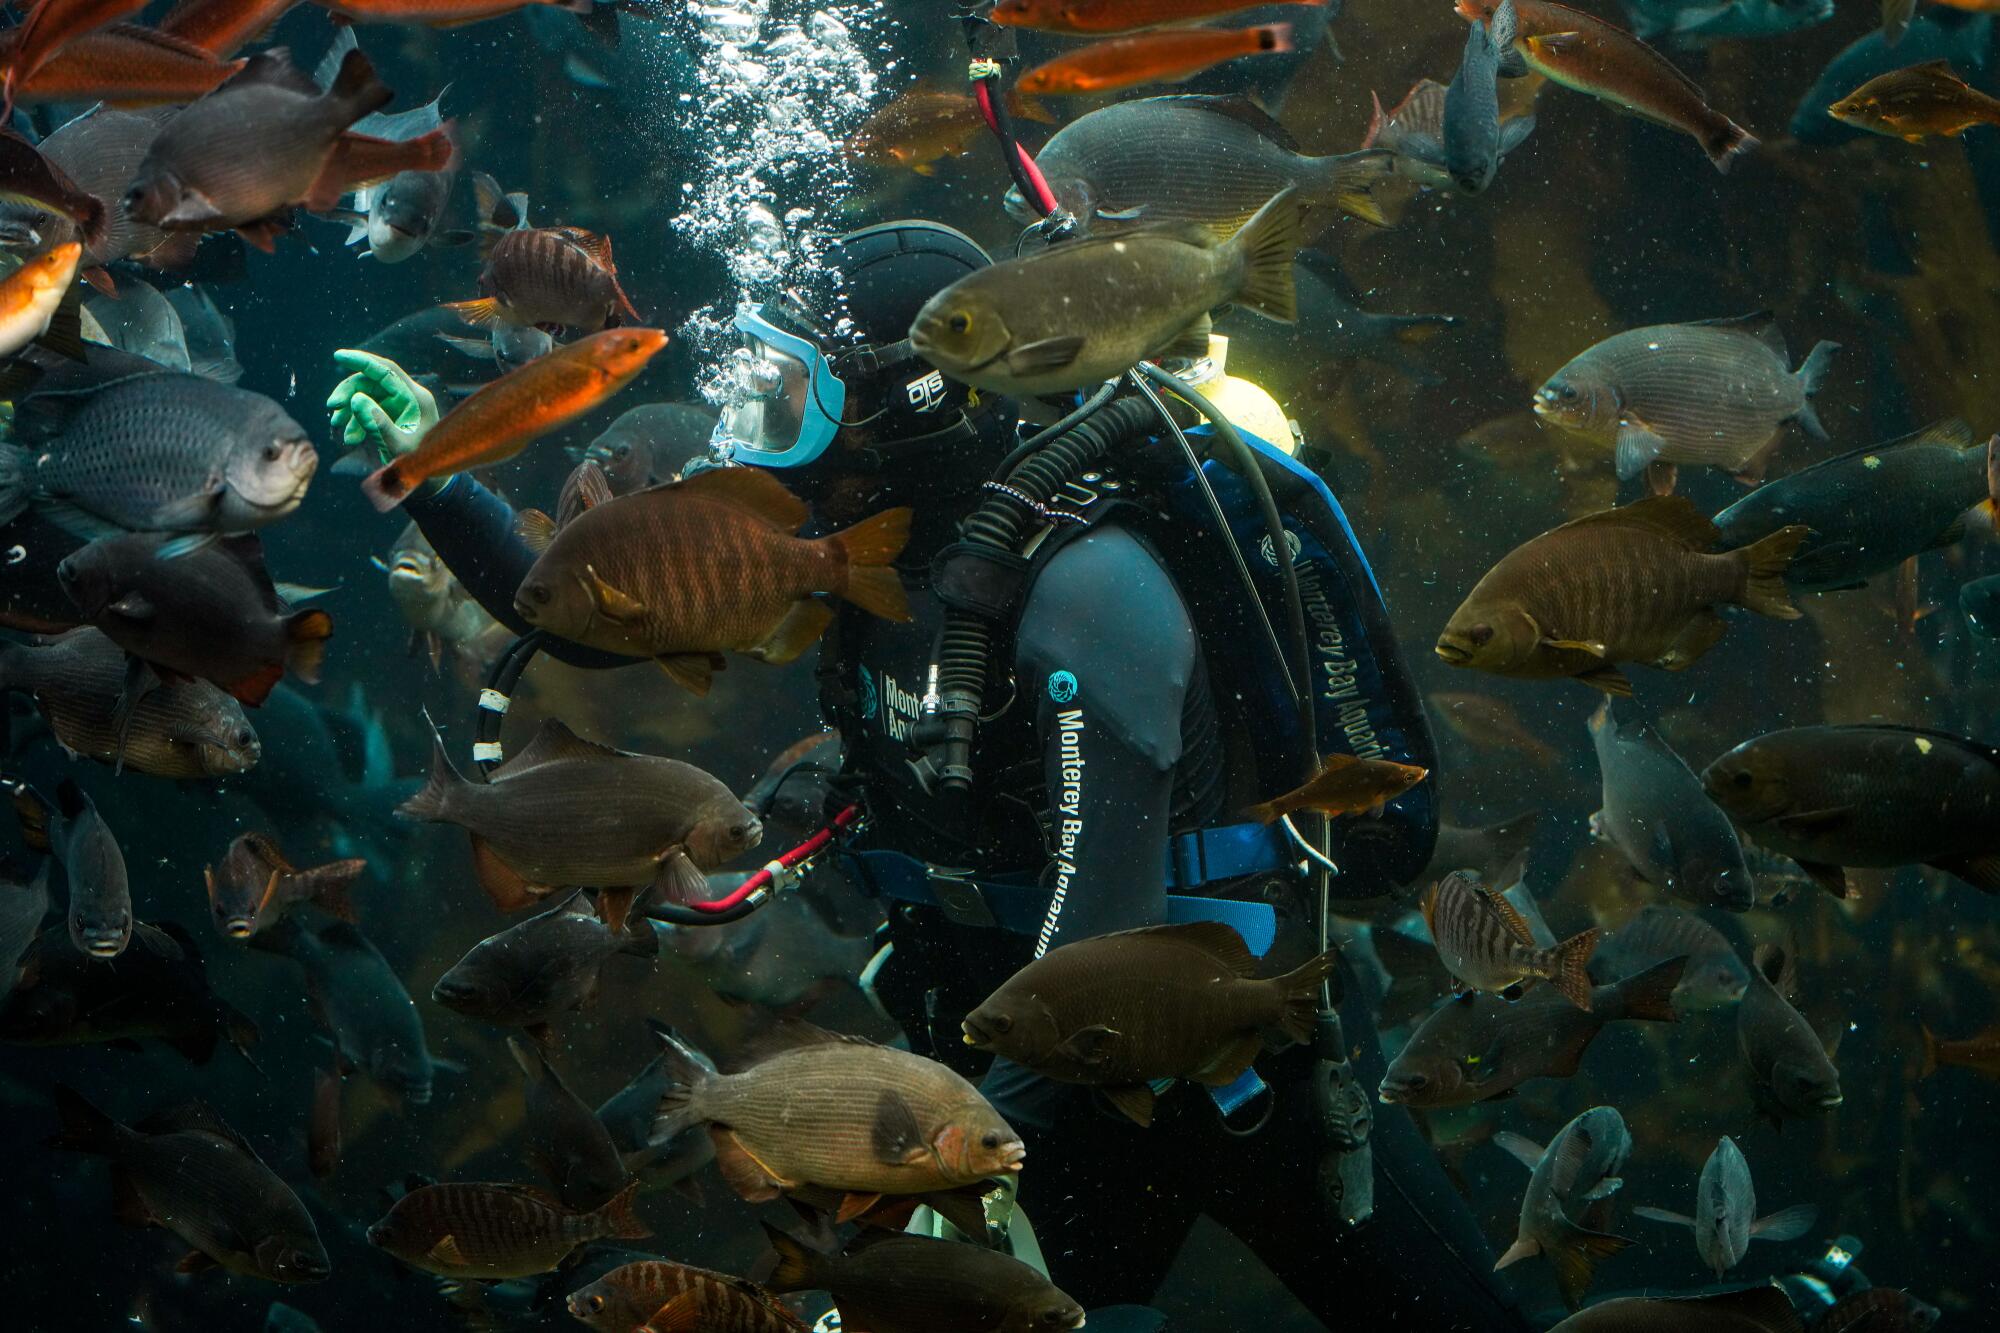 Bubbles rise from a diver's regulator amid a dense school of fish inside an aquarium tank